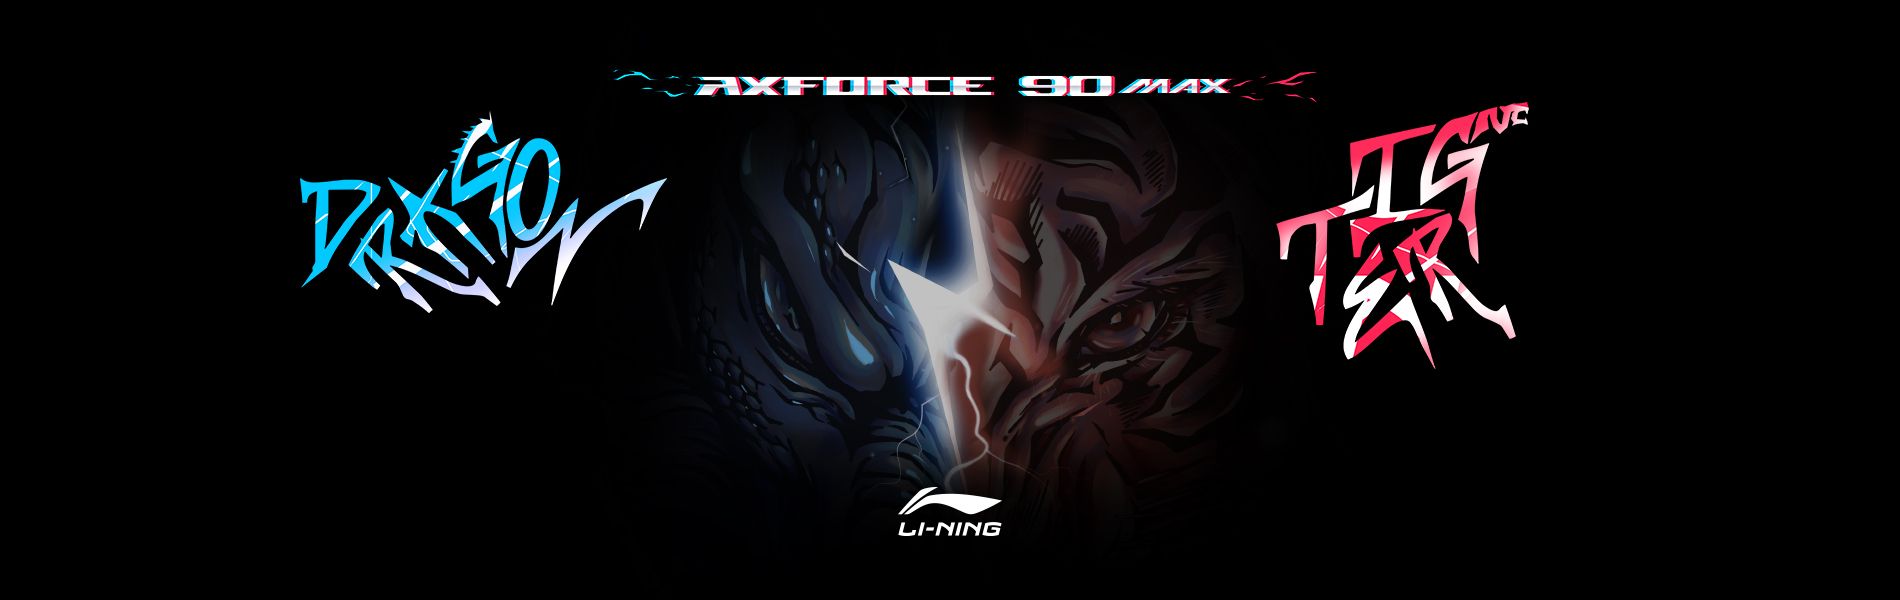 Li-Ning Axforce 90 Dragon Max - 4U | Li-Ning Studio - Official Li 